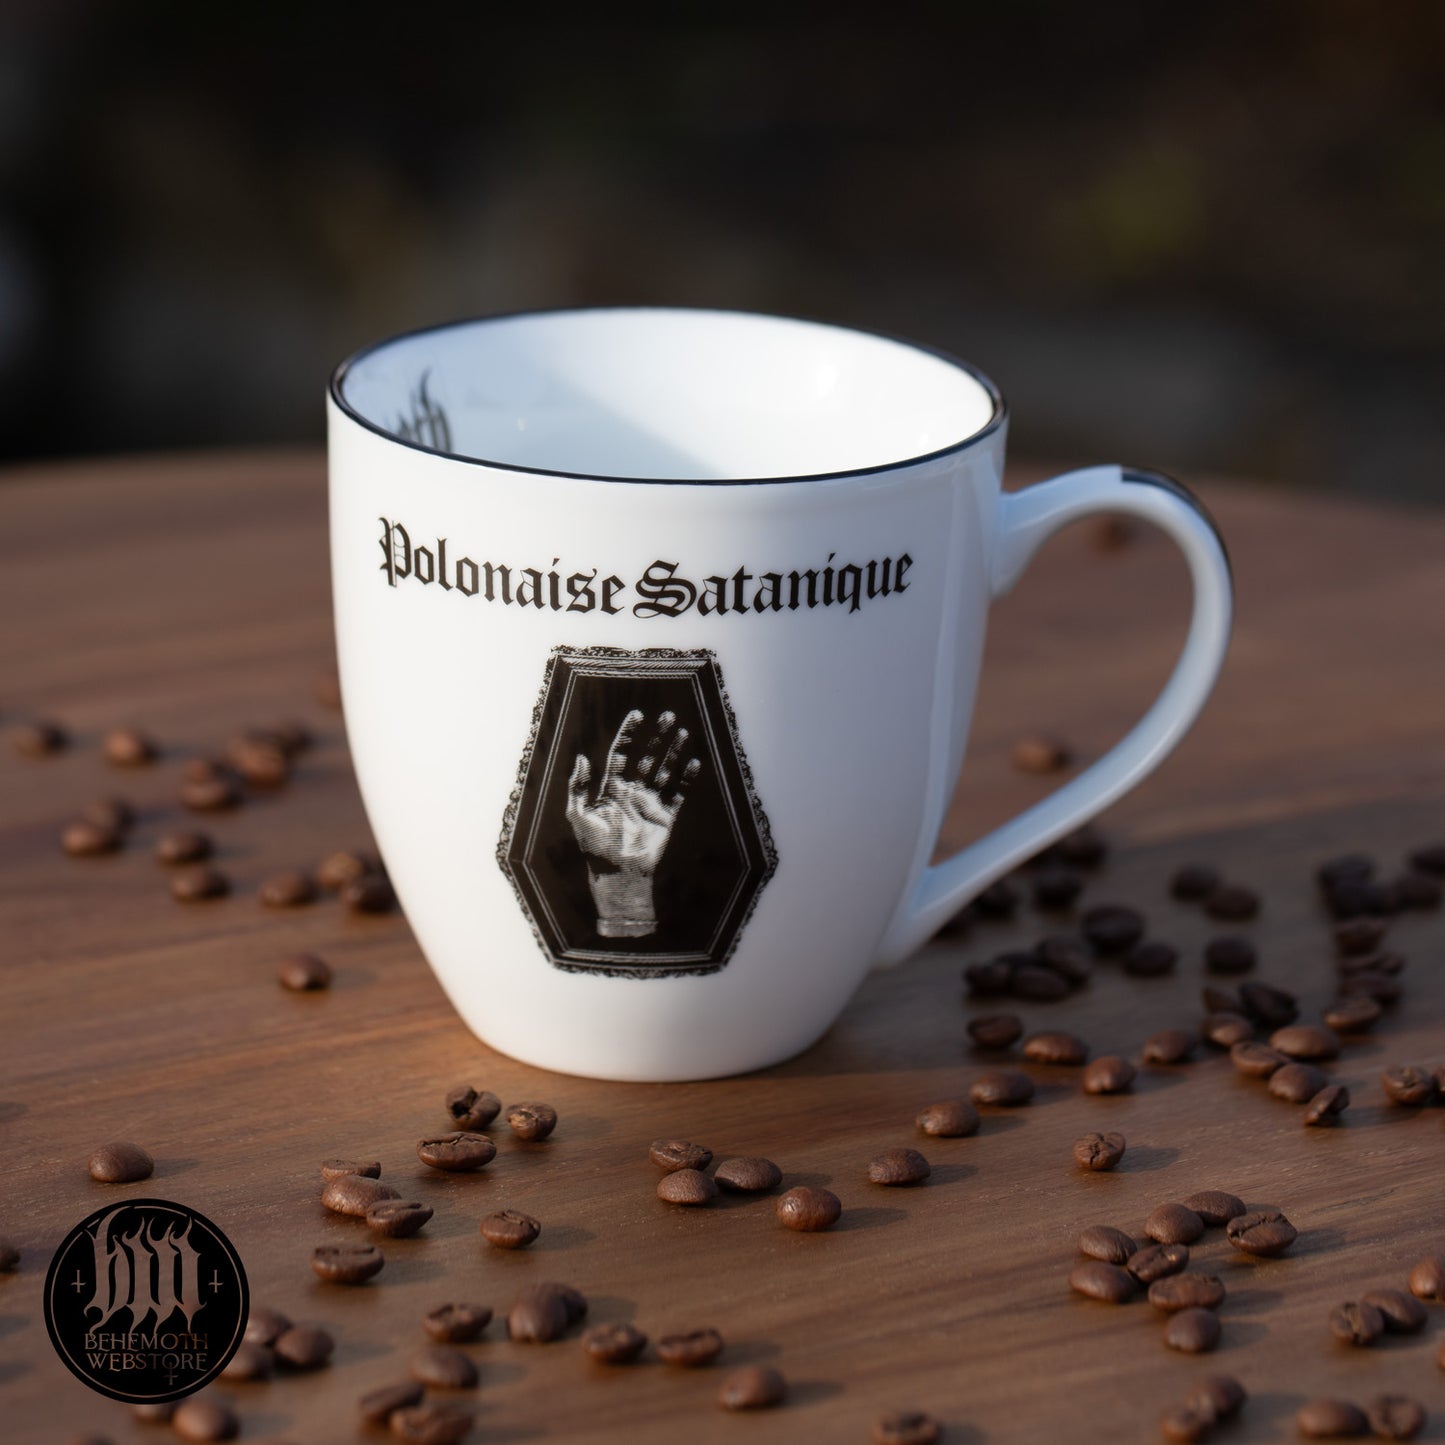 Behemoth 'Polonaise Satanique' mug